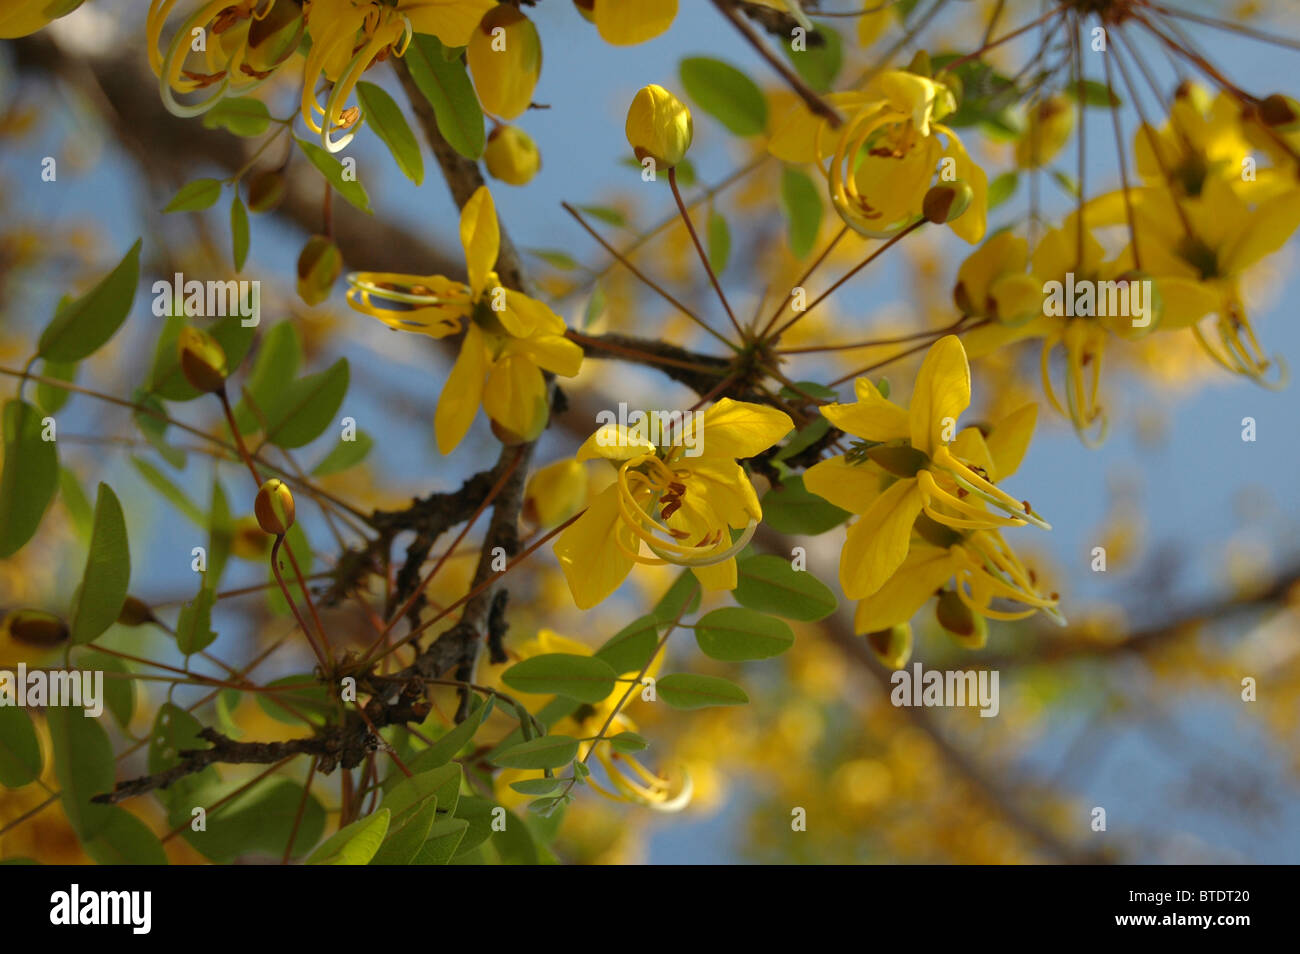 Close-up of Sjambokpeul (Cassia abreviata) flowers Stock Photo